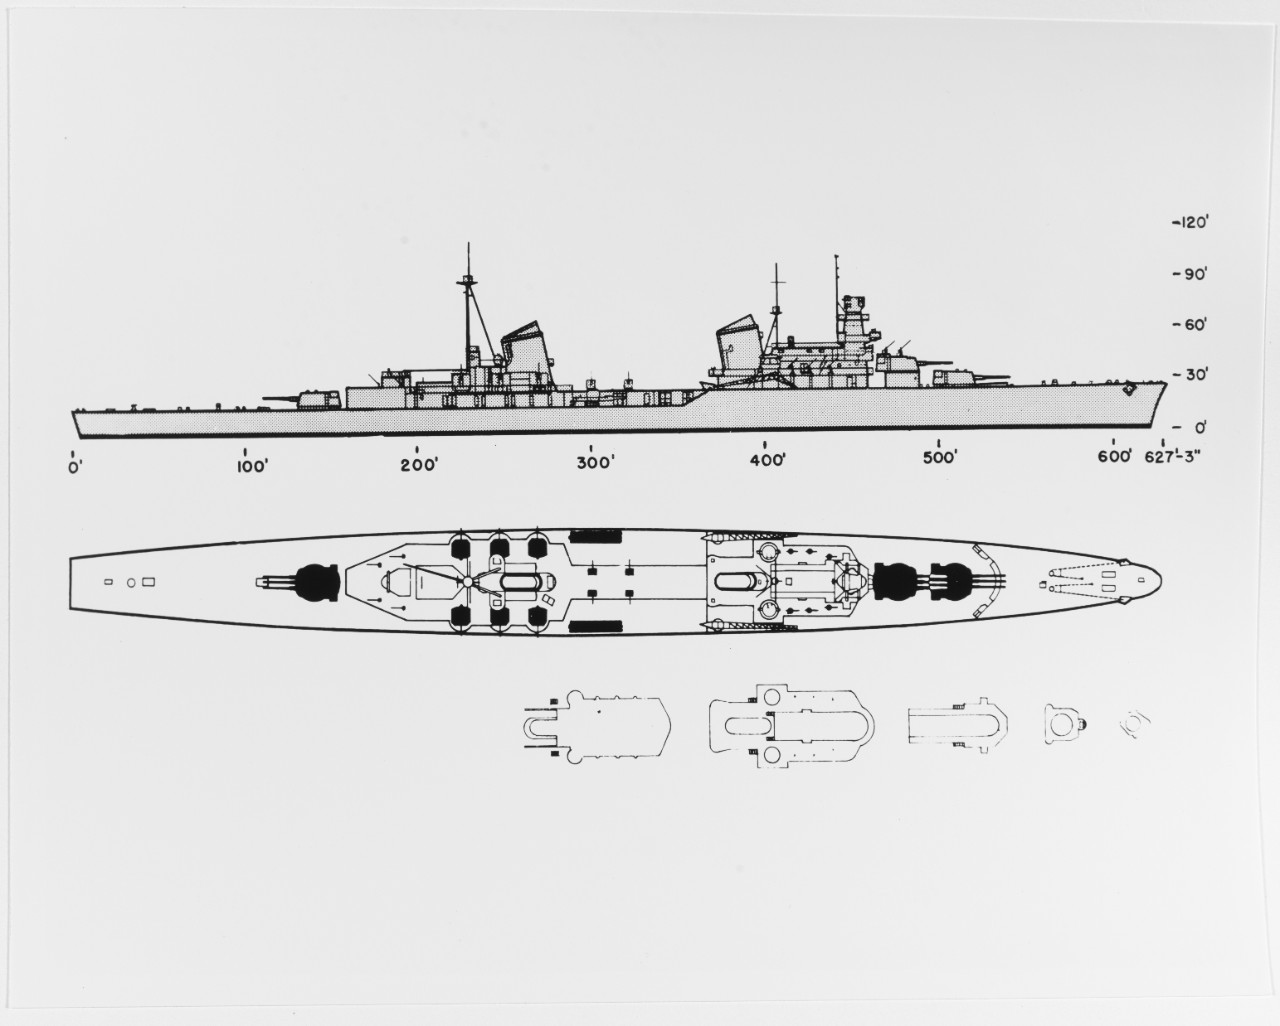 MAKSIM GORKI (Soviet heavy cruiser, 1938-1959)